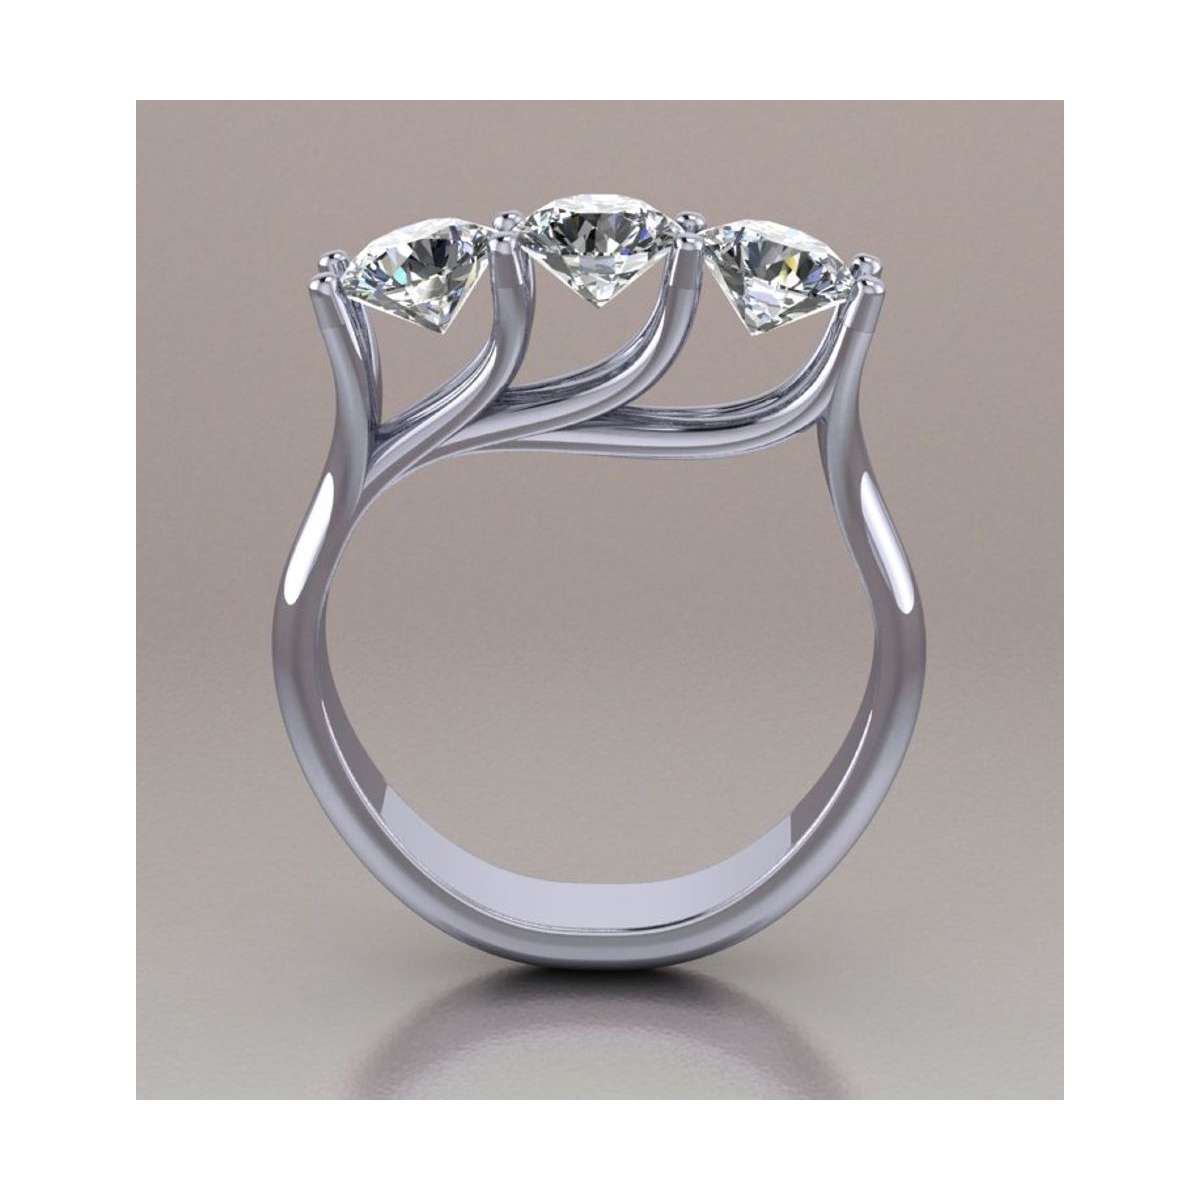 Platinum Trilogy ring 1.5 carats GIA certified diamonds G-IF